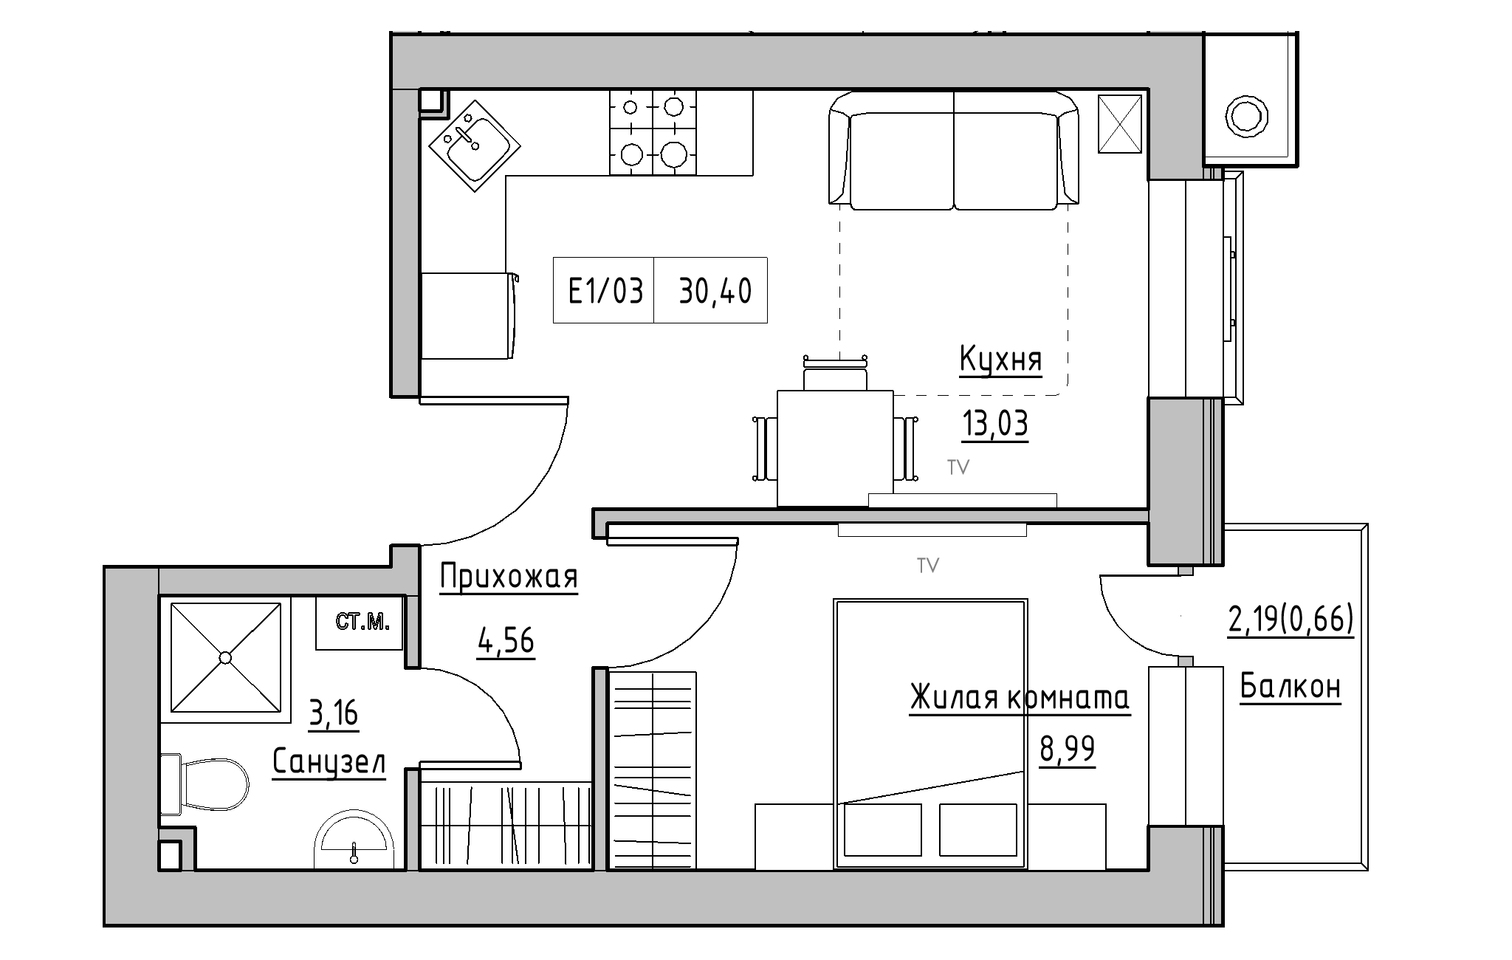 Planning 1-rm flats area 30.4m2, KS-013-04/0002.